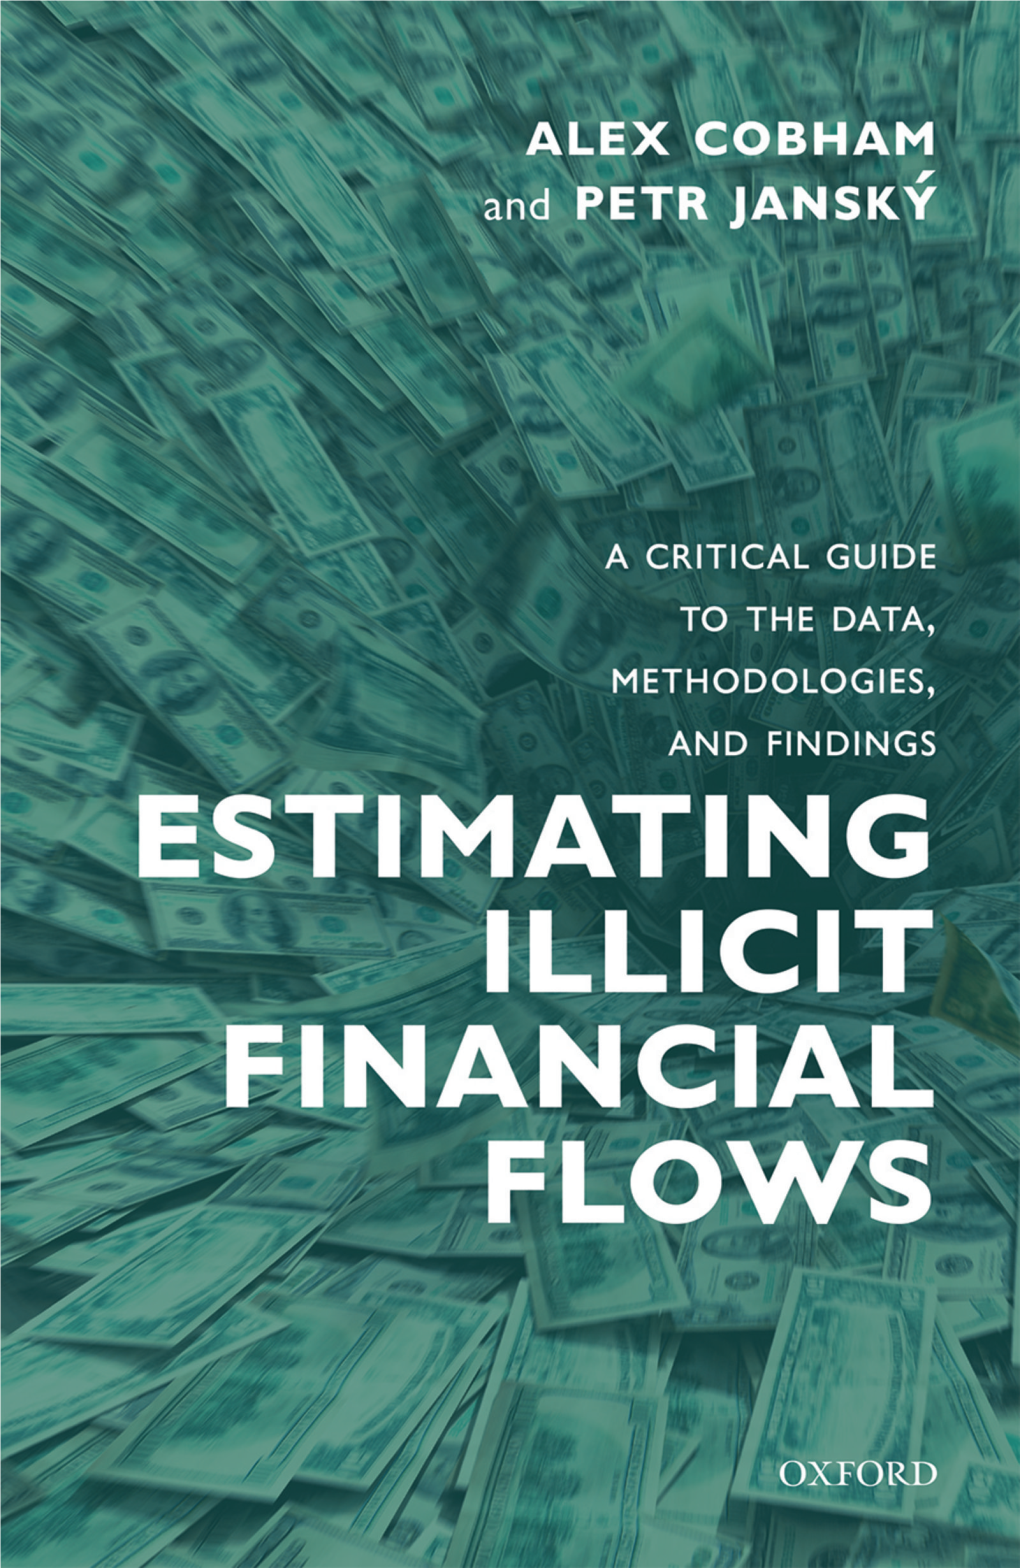 Estimating Illicit Financial Flows OUP CORRECTED PROOF – FINAL, 25/01/20, Spi OUP CORRECTED PROOF – FINAL, 25/01/20, Spi